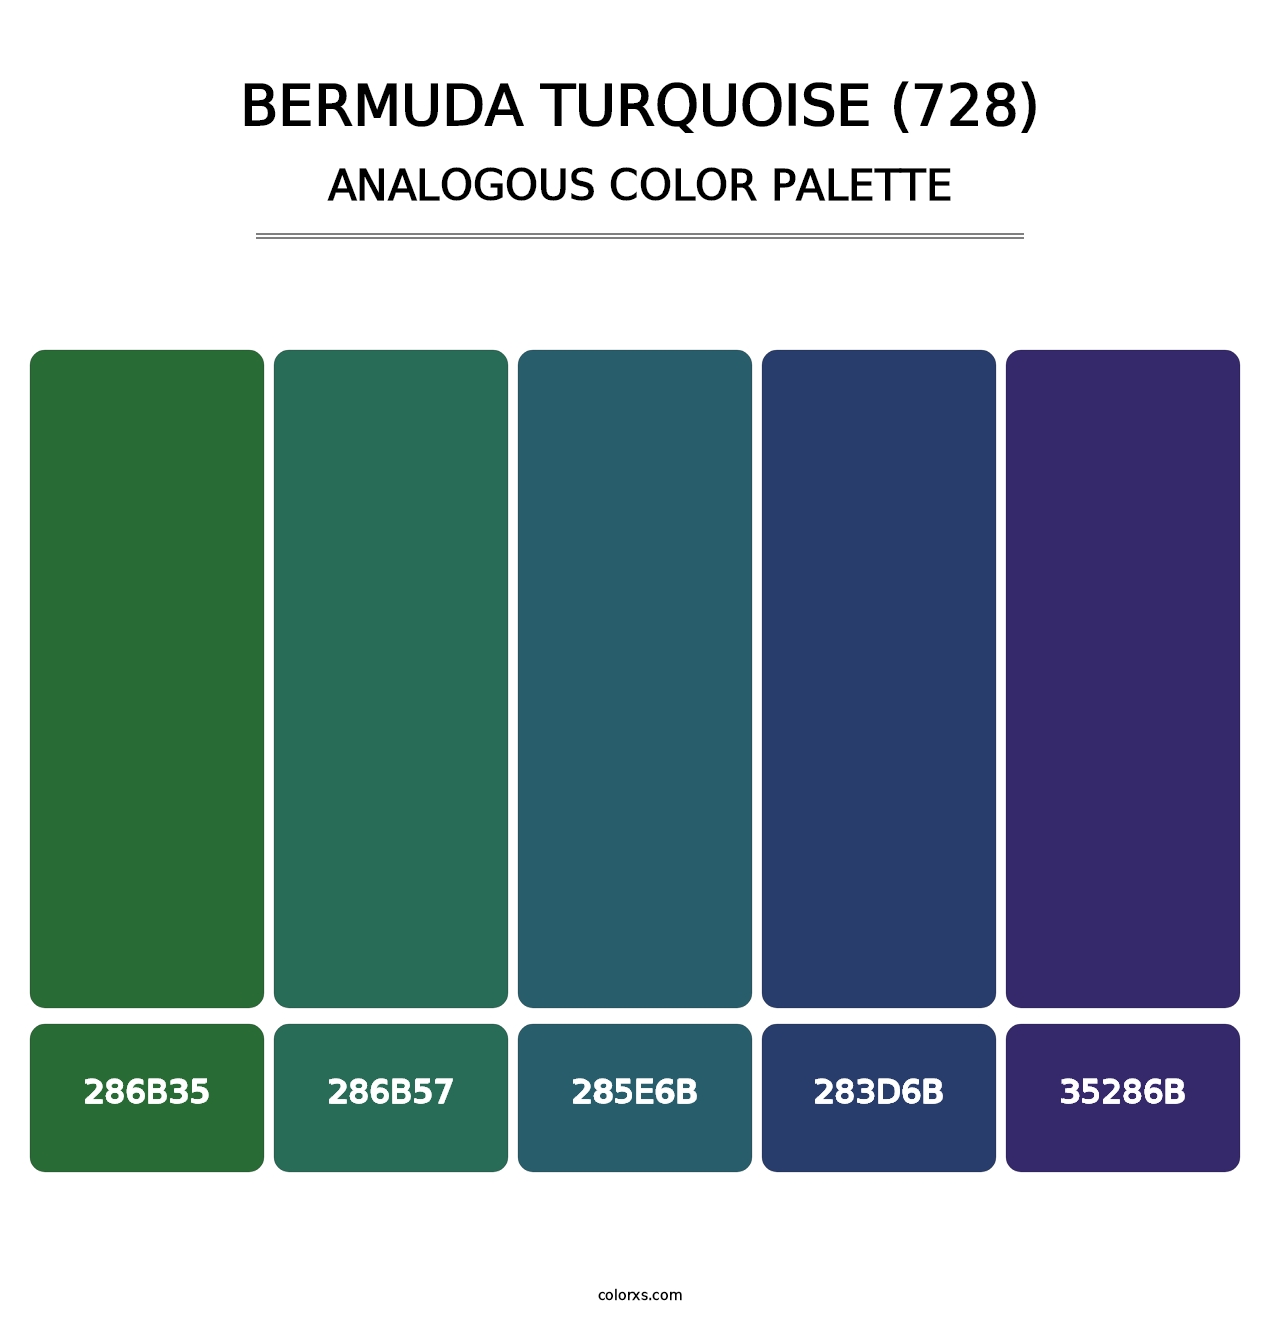 Bermuda Turquoise (728) - Analogous Color Palette